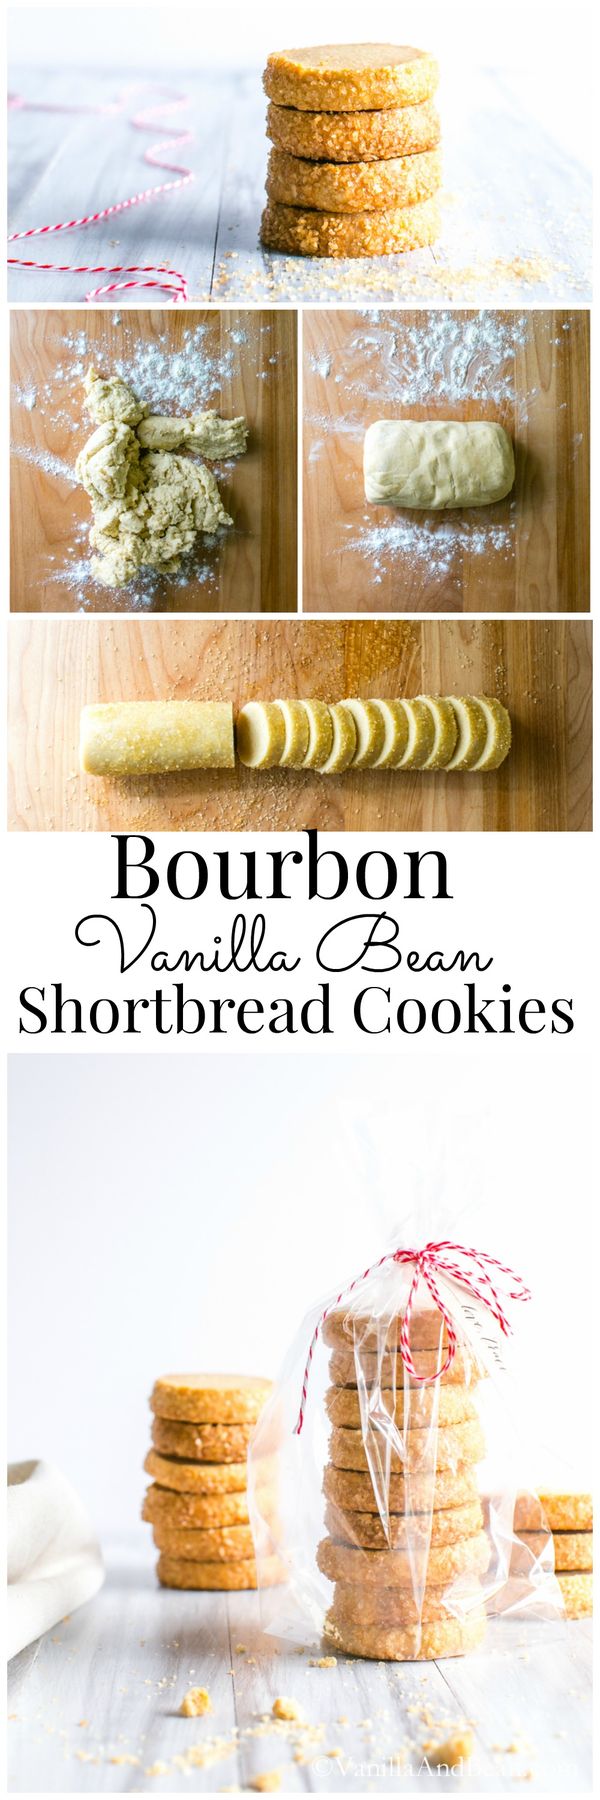 Bourbon Vanilla Bean Shortbread Cookies